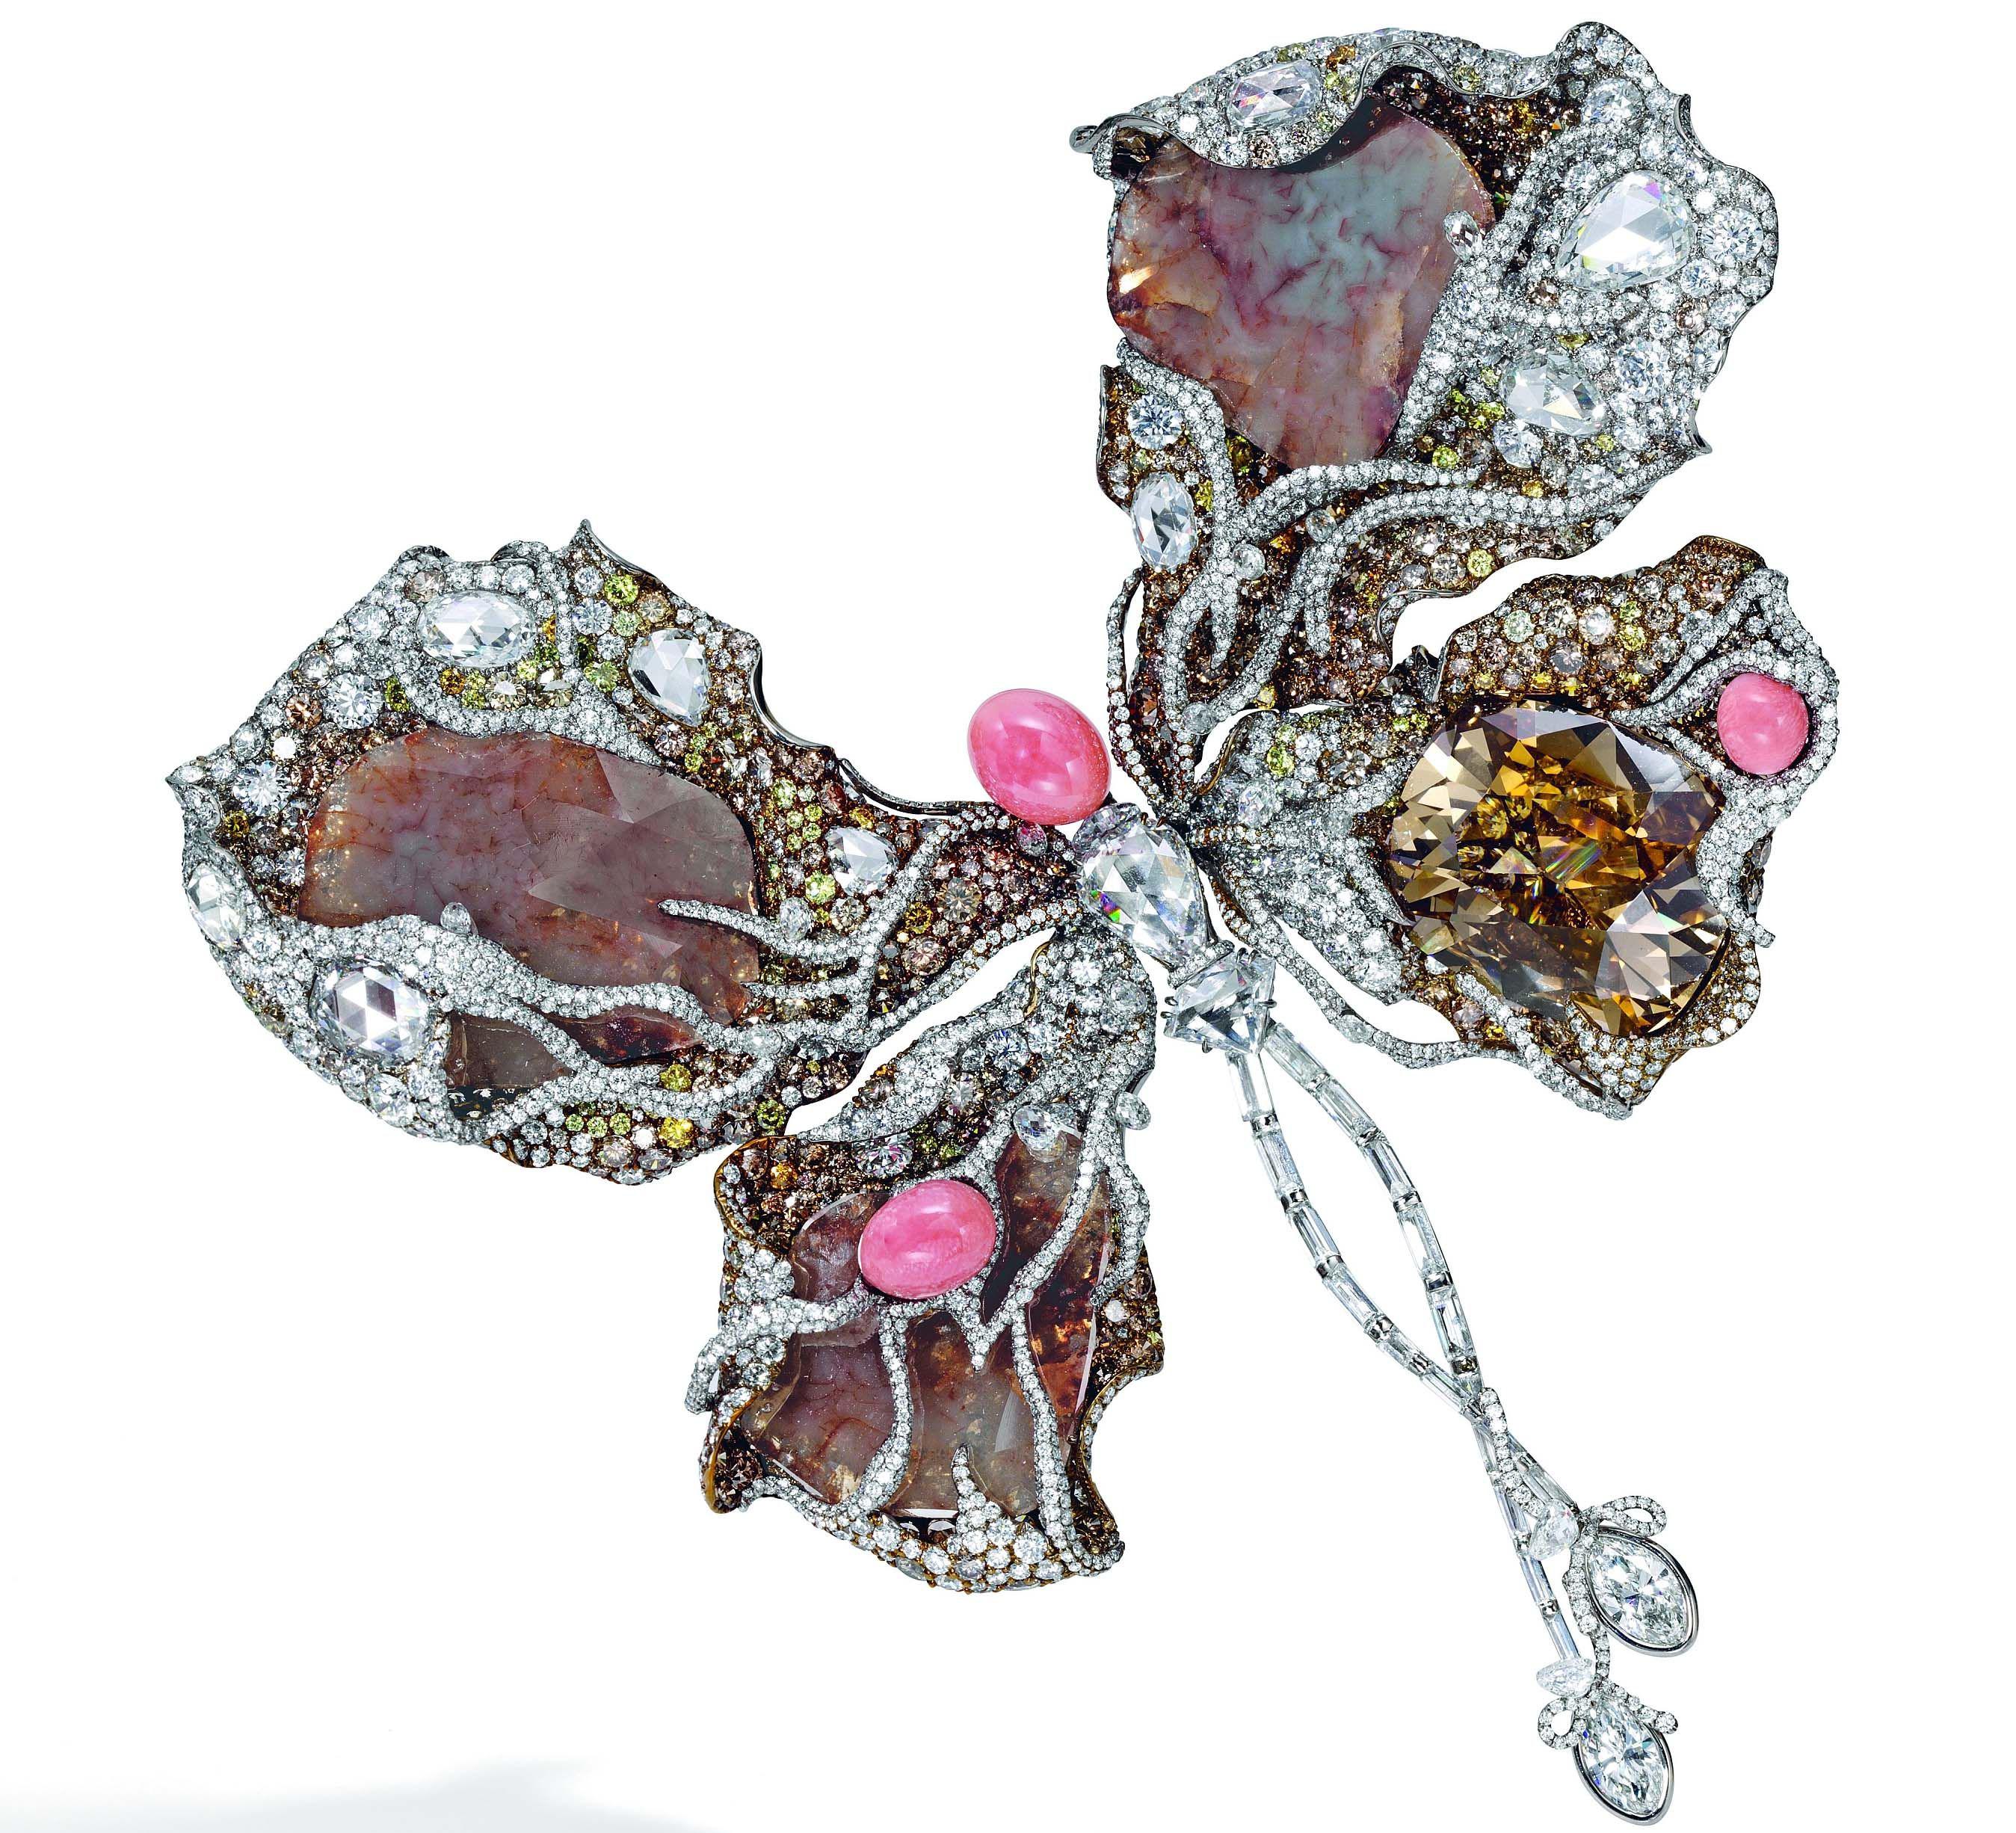 Spilla 'Ballerina Butterfly', progettata da Sarah Jessica Parker e la designer taiwanese Cindy Chao